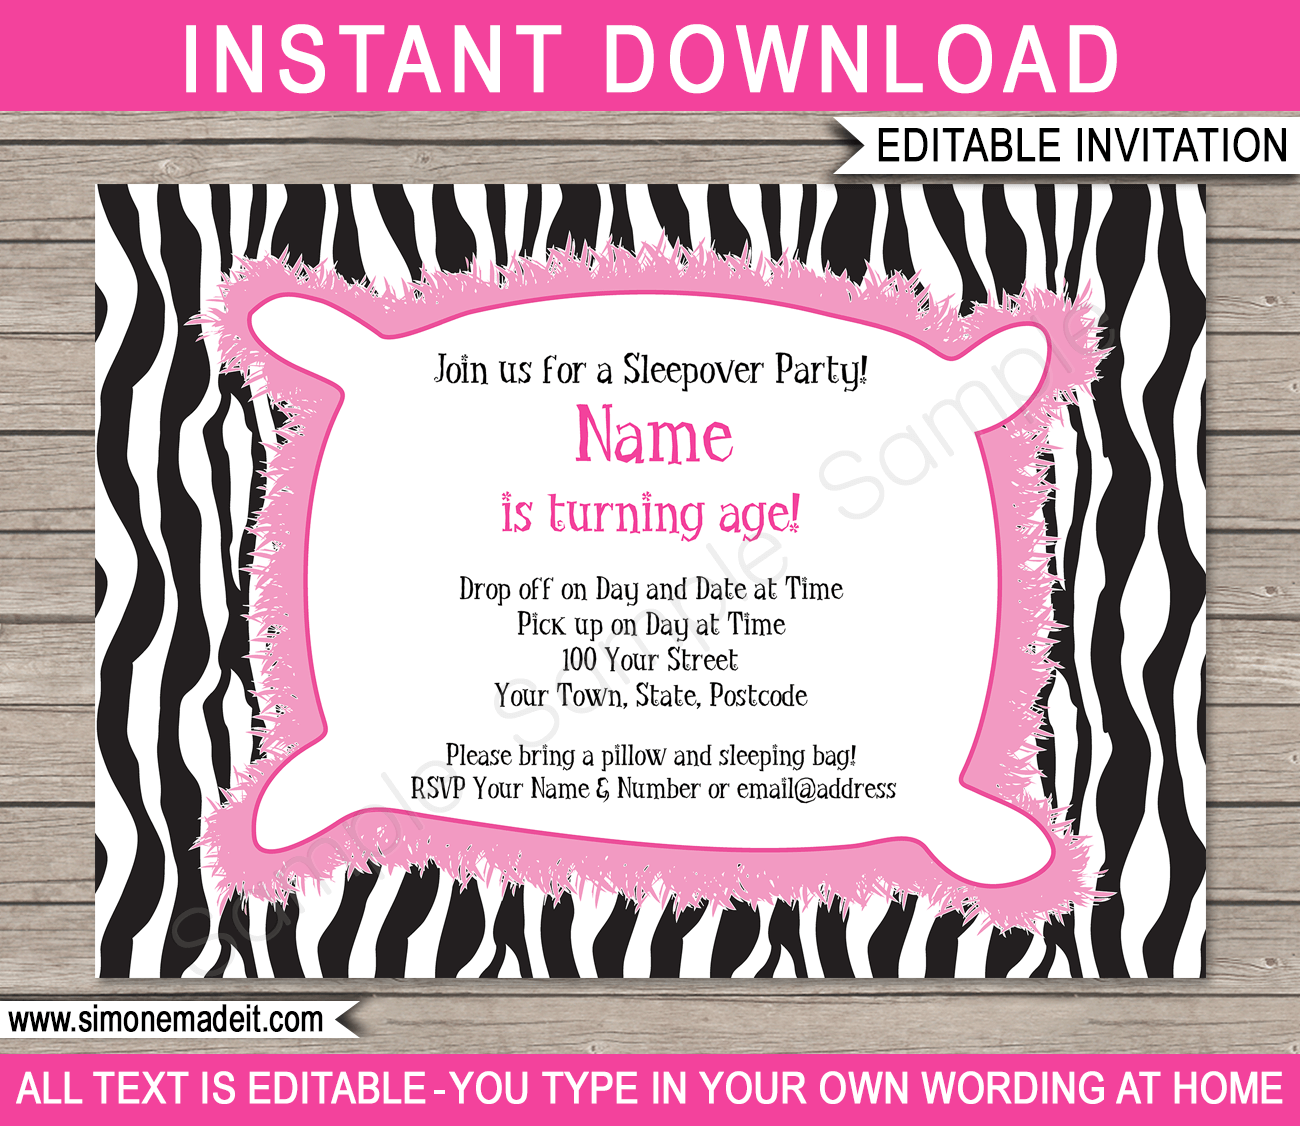 Printable Sleepover Party Invitations Template | Slumber Birthday Party Invite | DIY Editable Text | INSTANT DOWNLOAD $7.50 via SIMONEmadeit.com